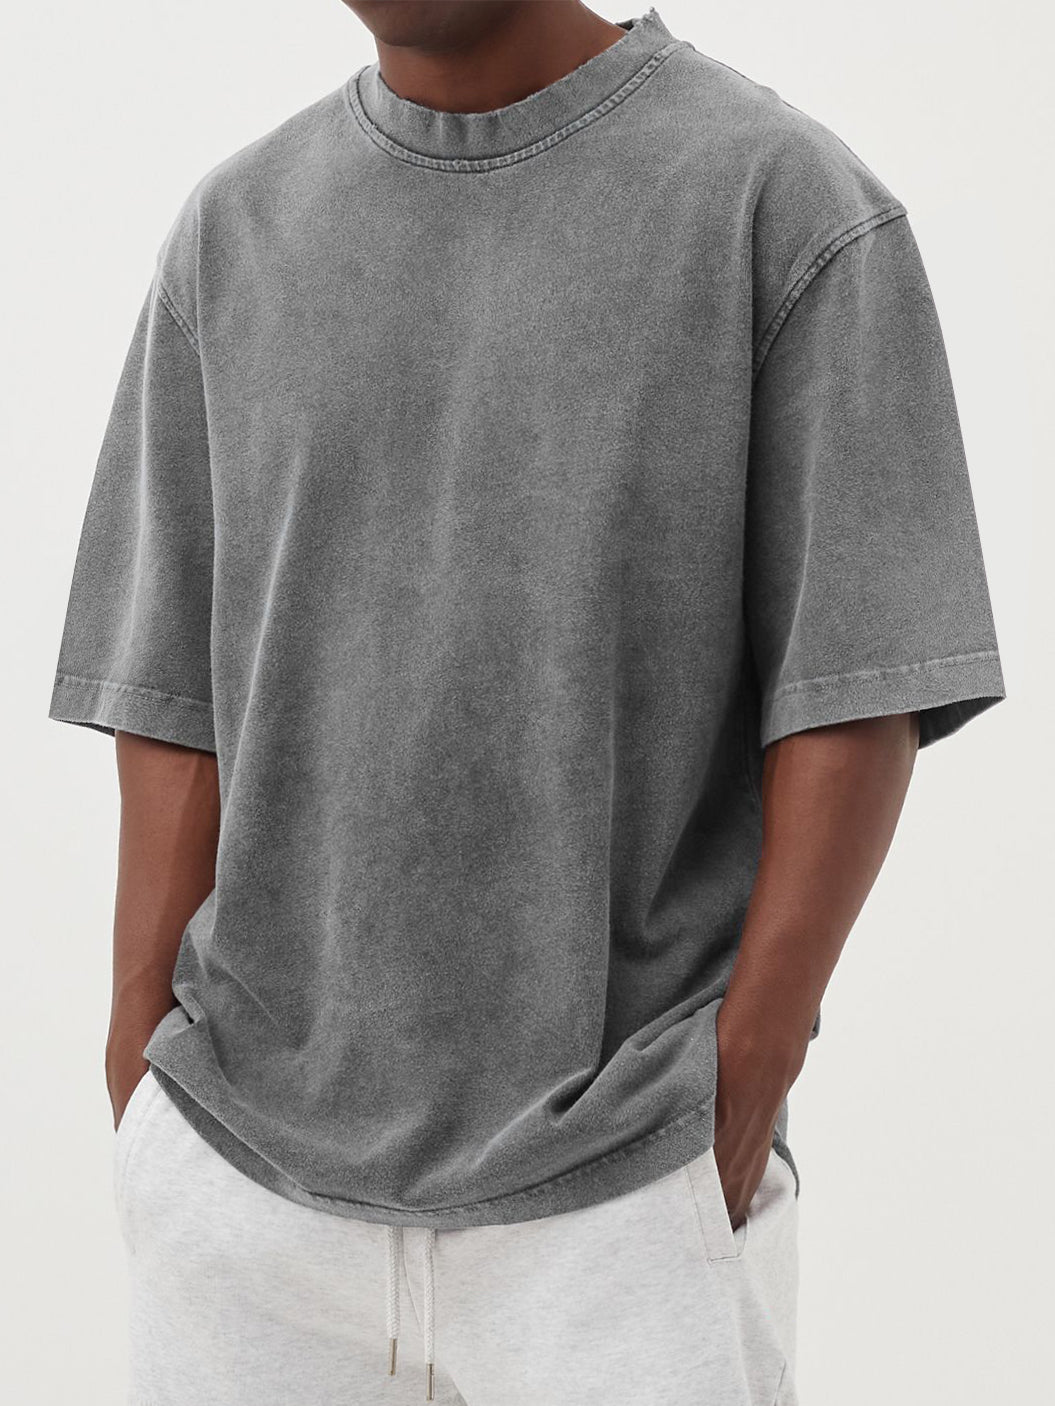 Men's Basic Washed Distressed Cotton Round Neck Short Sleeve T-Shirt